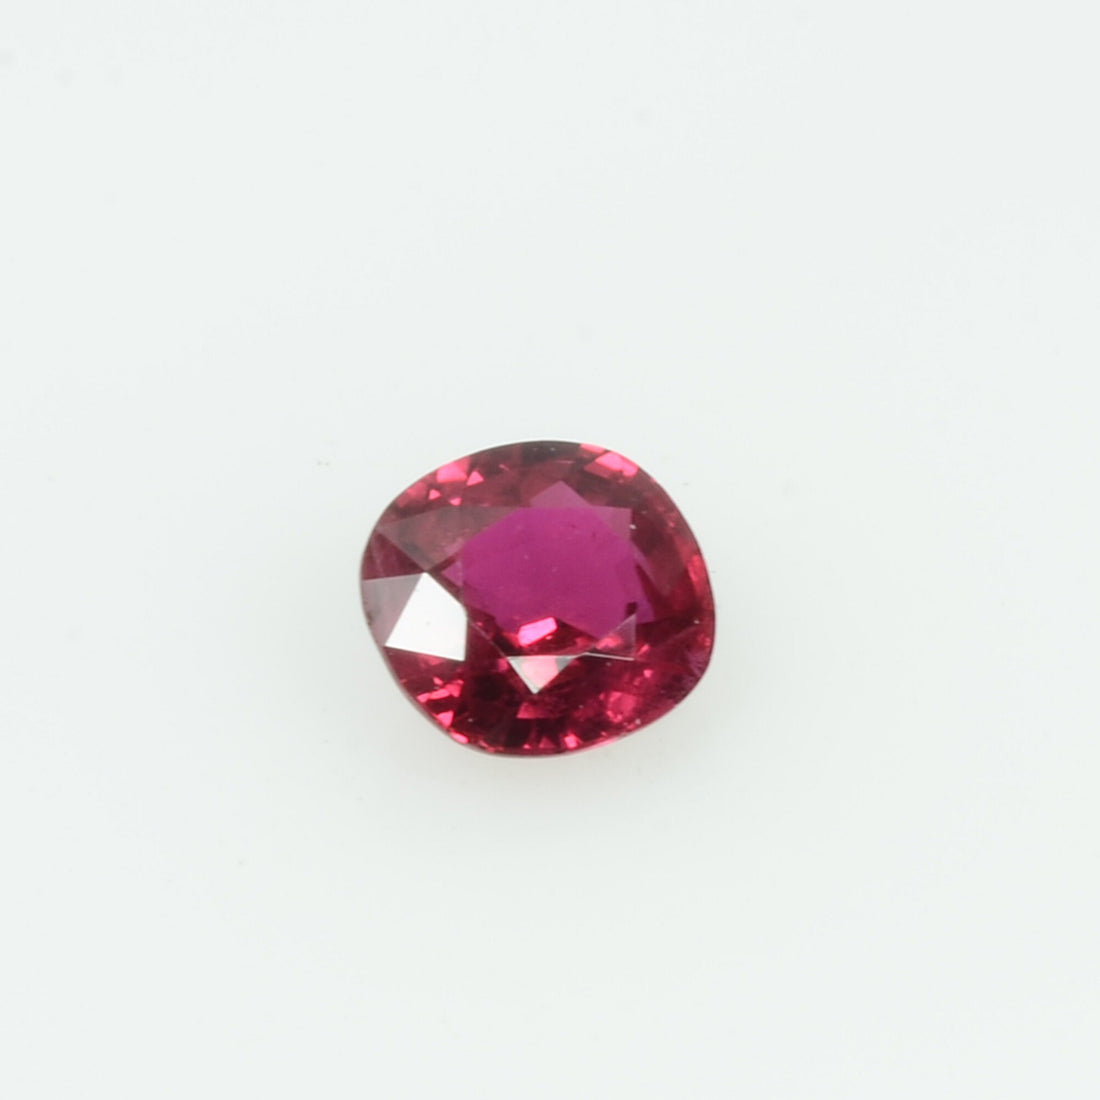 0.30 cts Natural Burma Ruby Loose Gemstone Cushion Cut